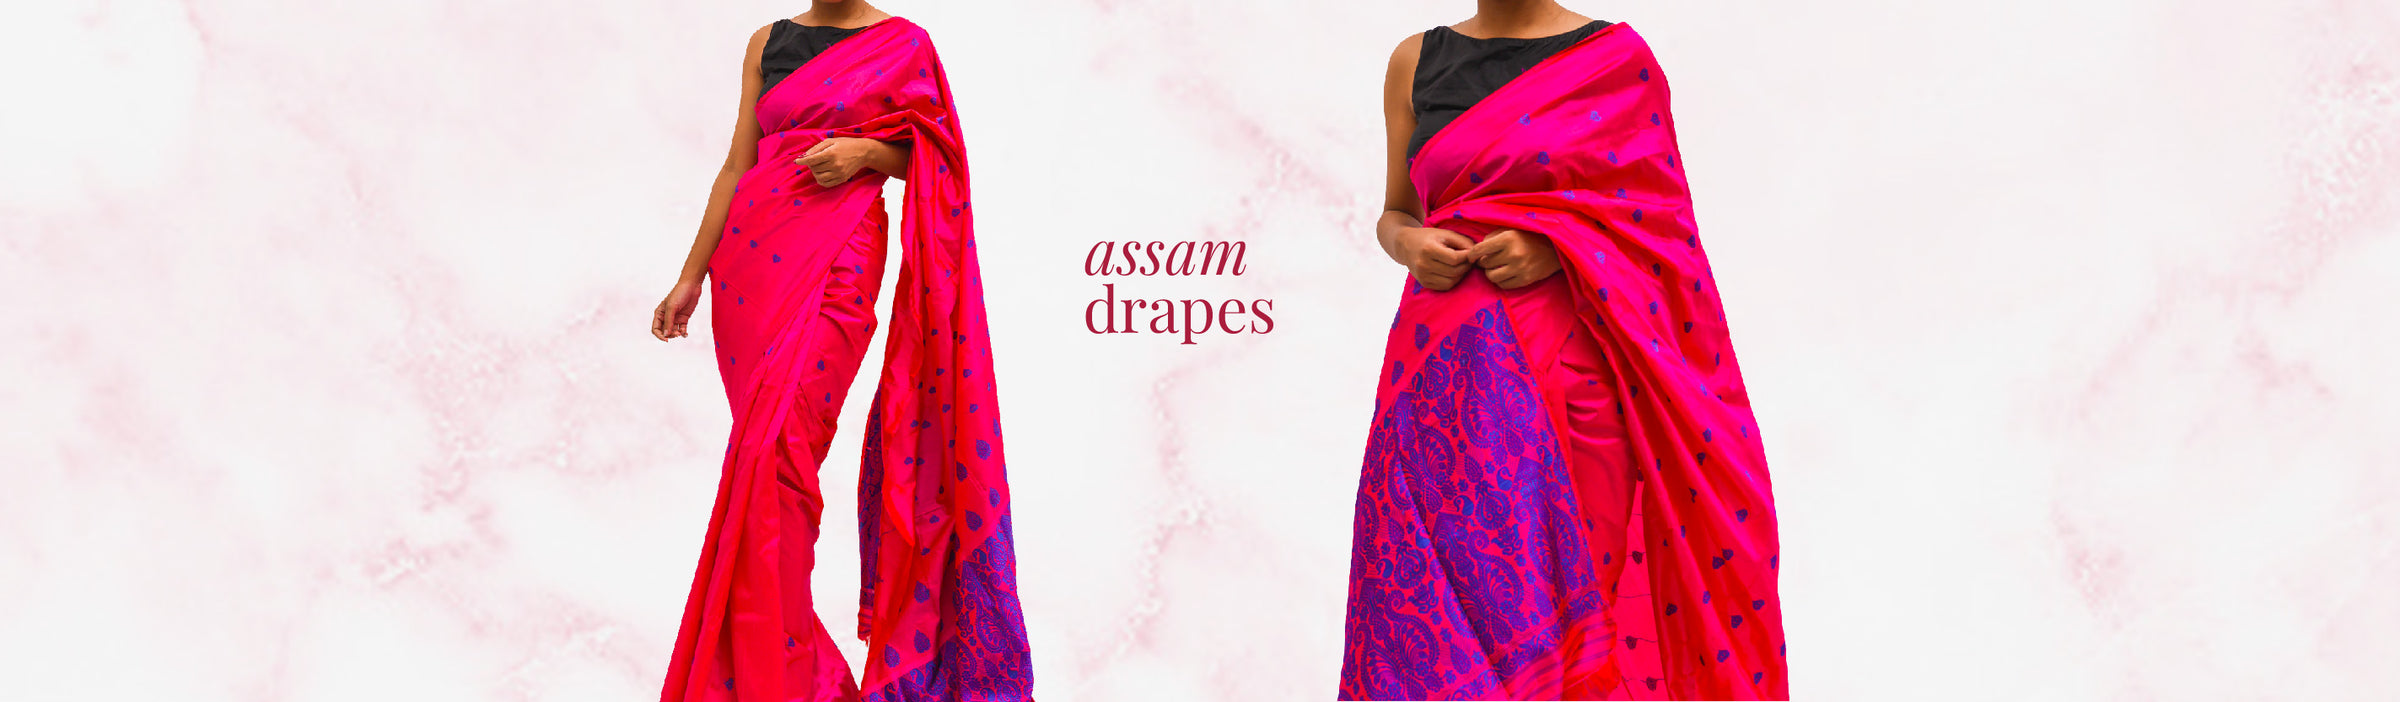 Assam drapes